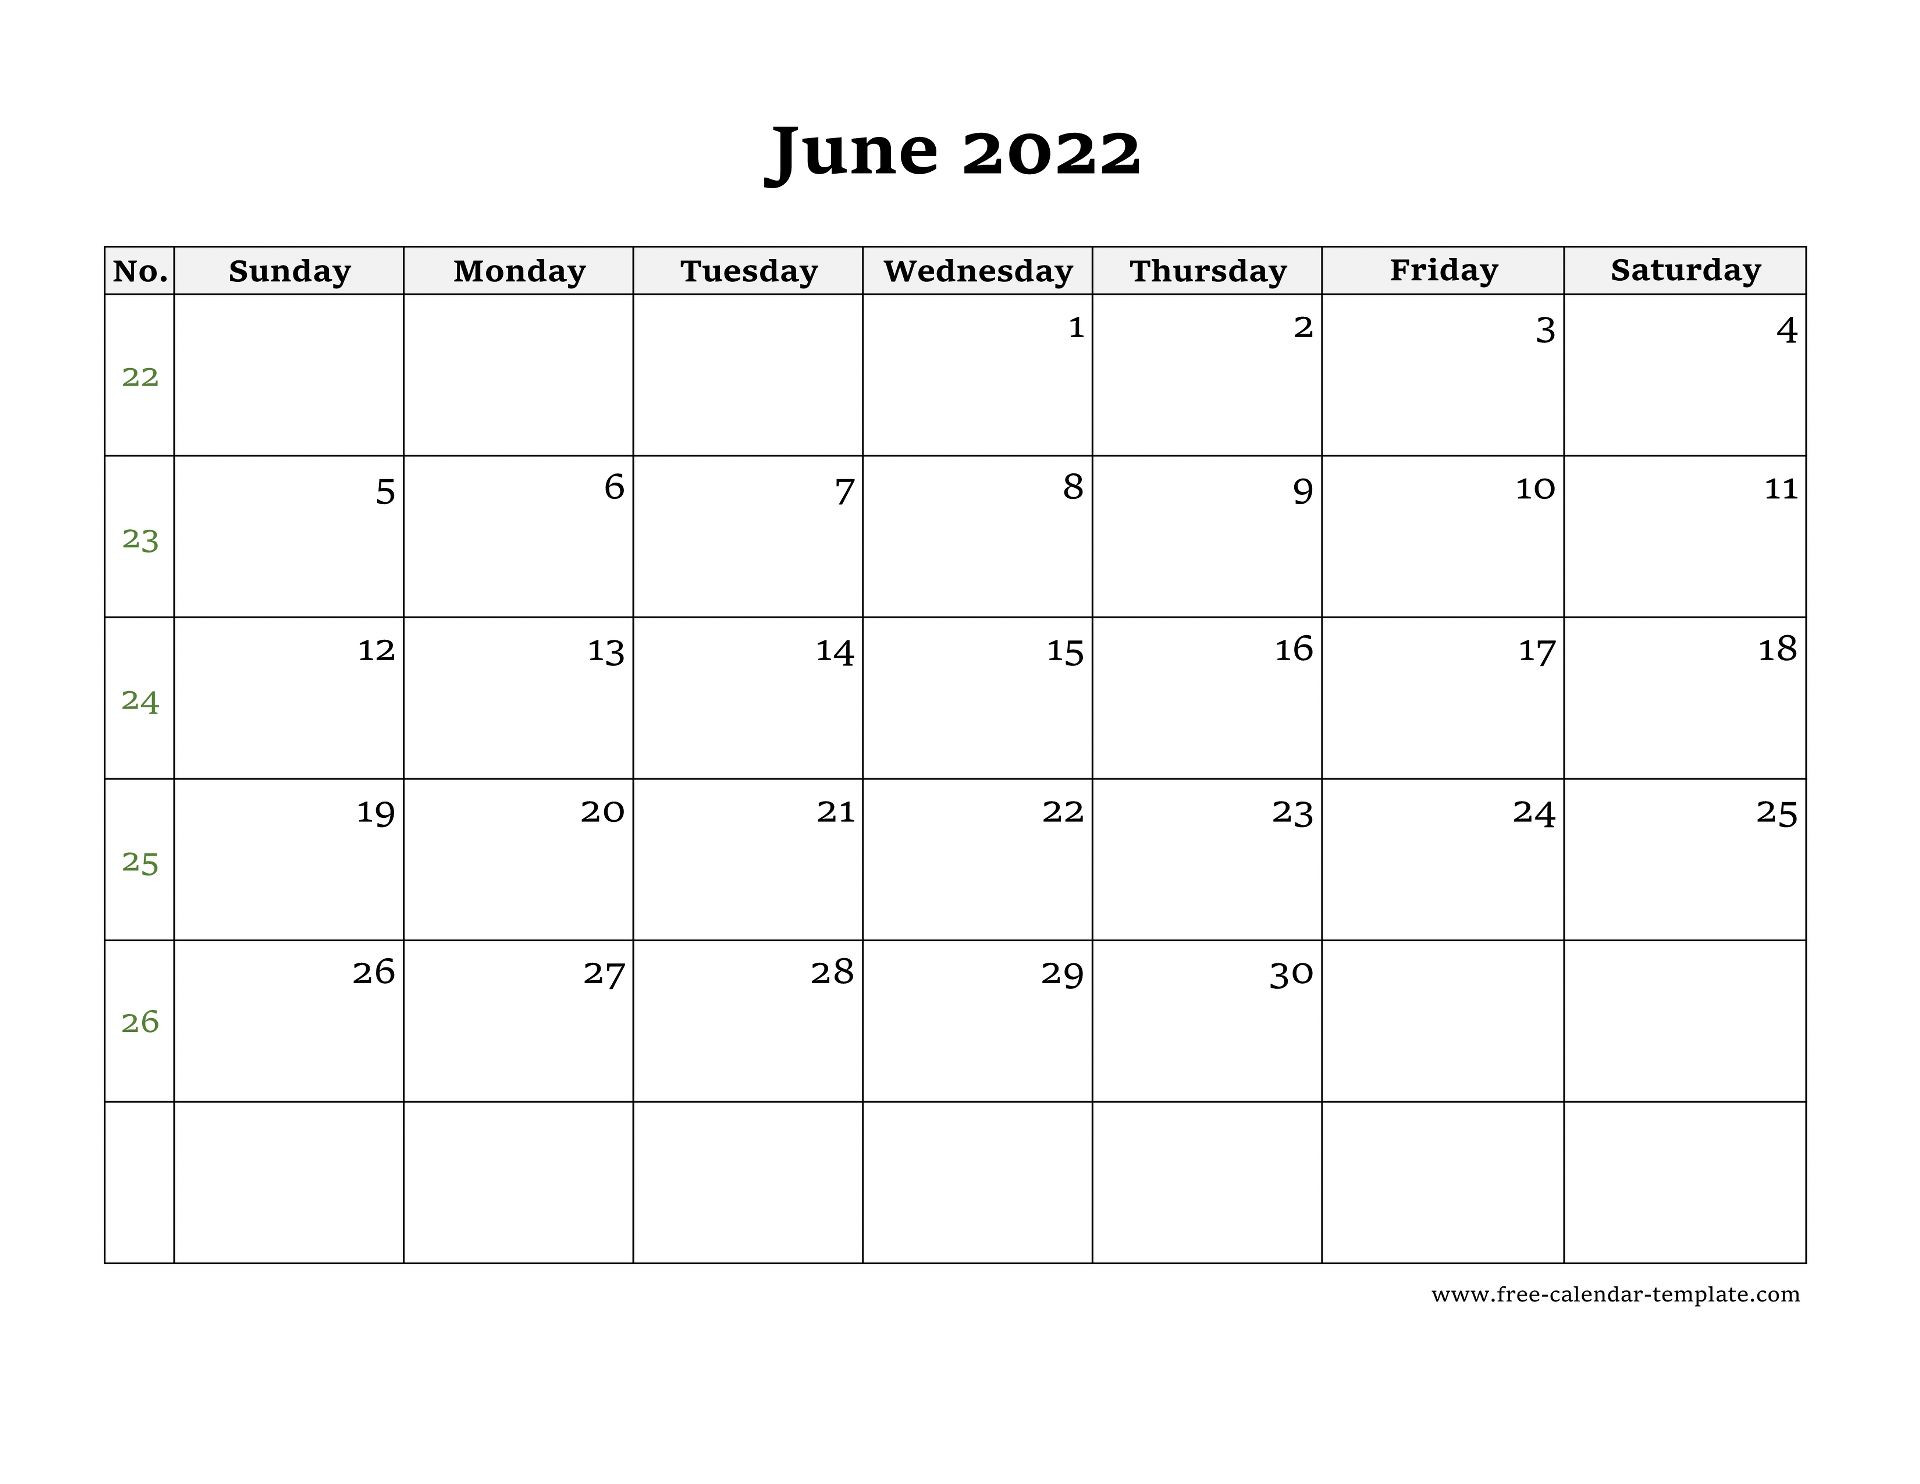 June 2022 Free Calendar Tempplate | Free-Calendar-Template  June 2022 Calendar Printable